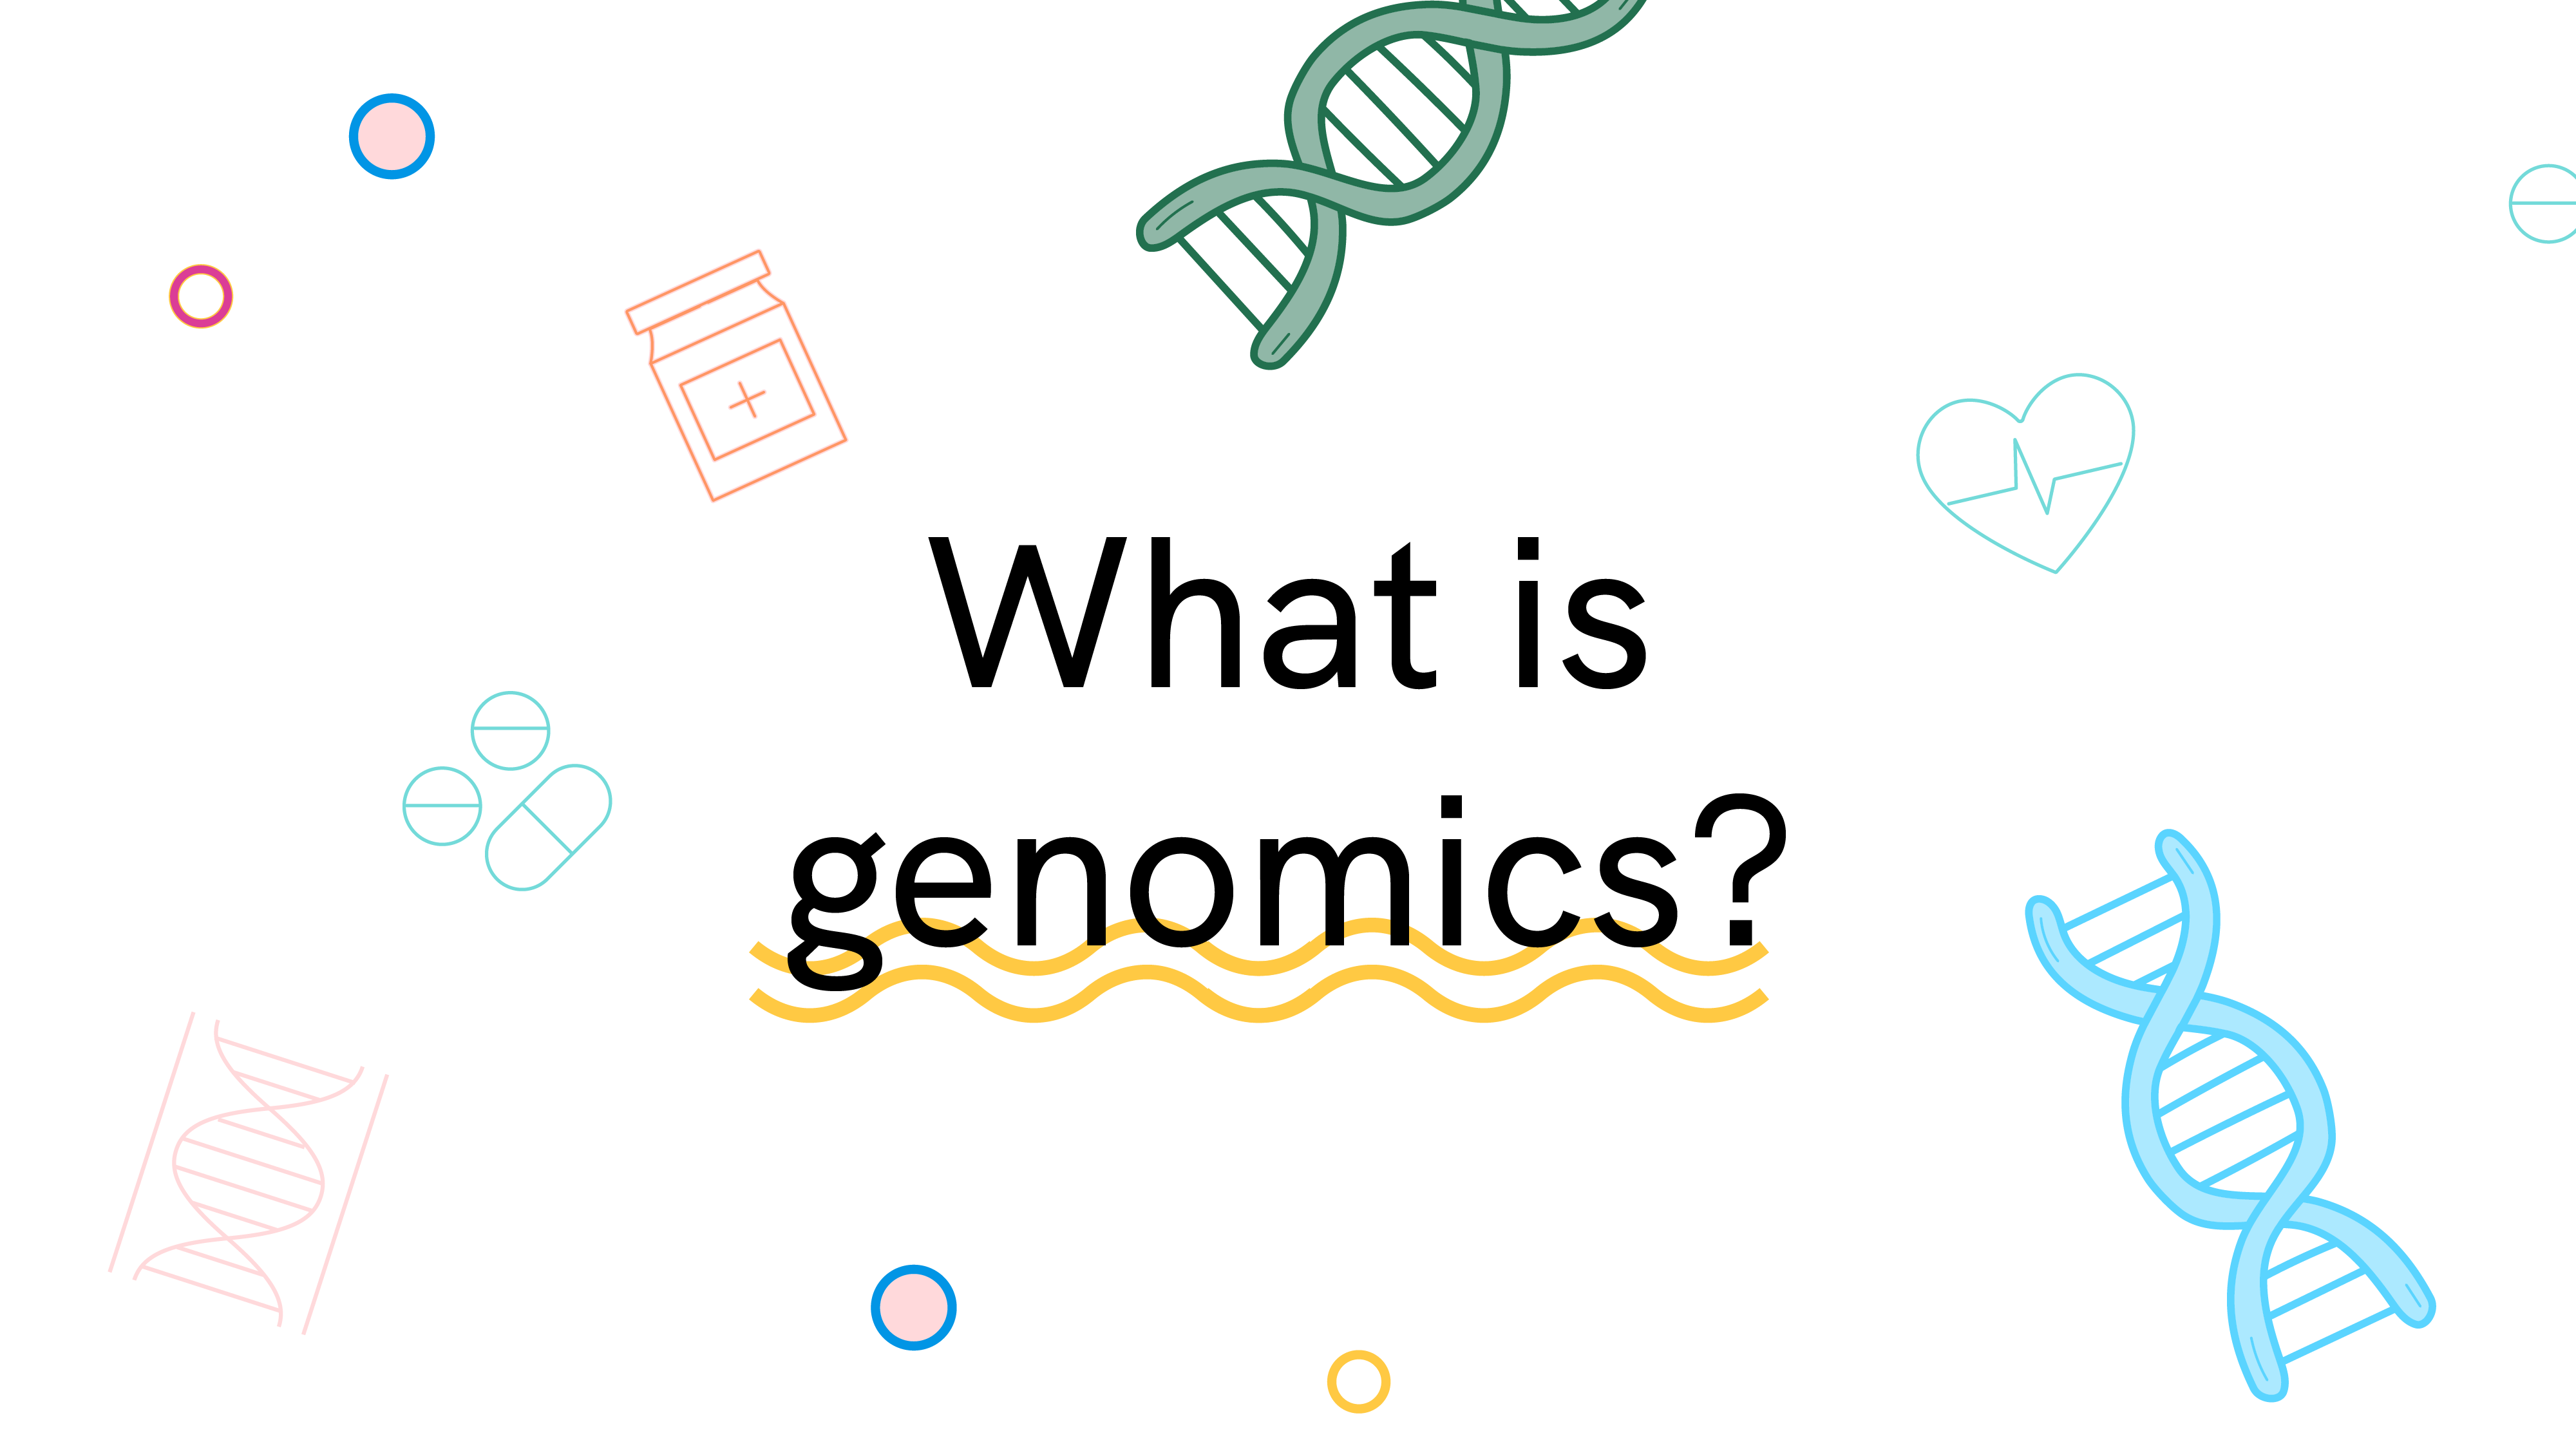 What is genomics?